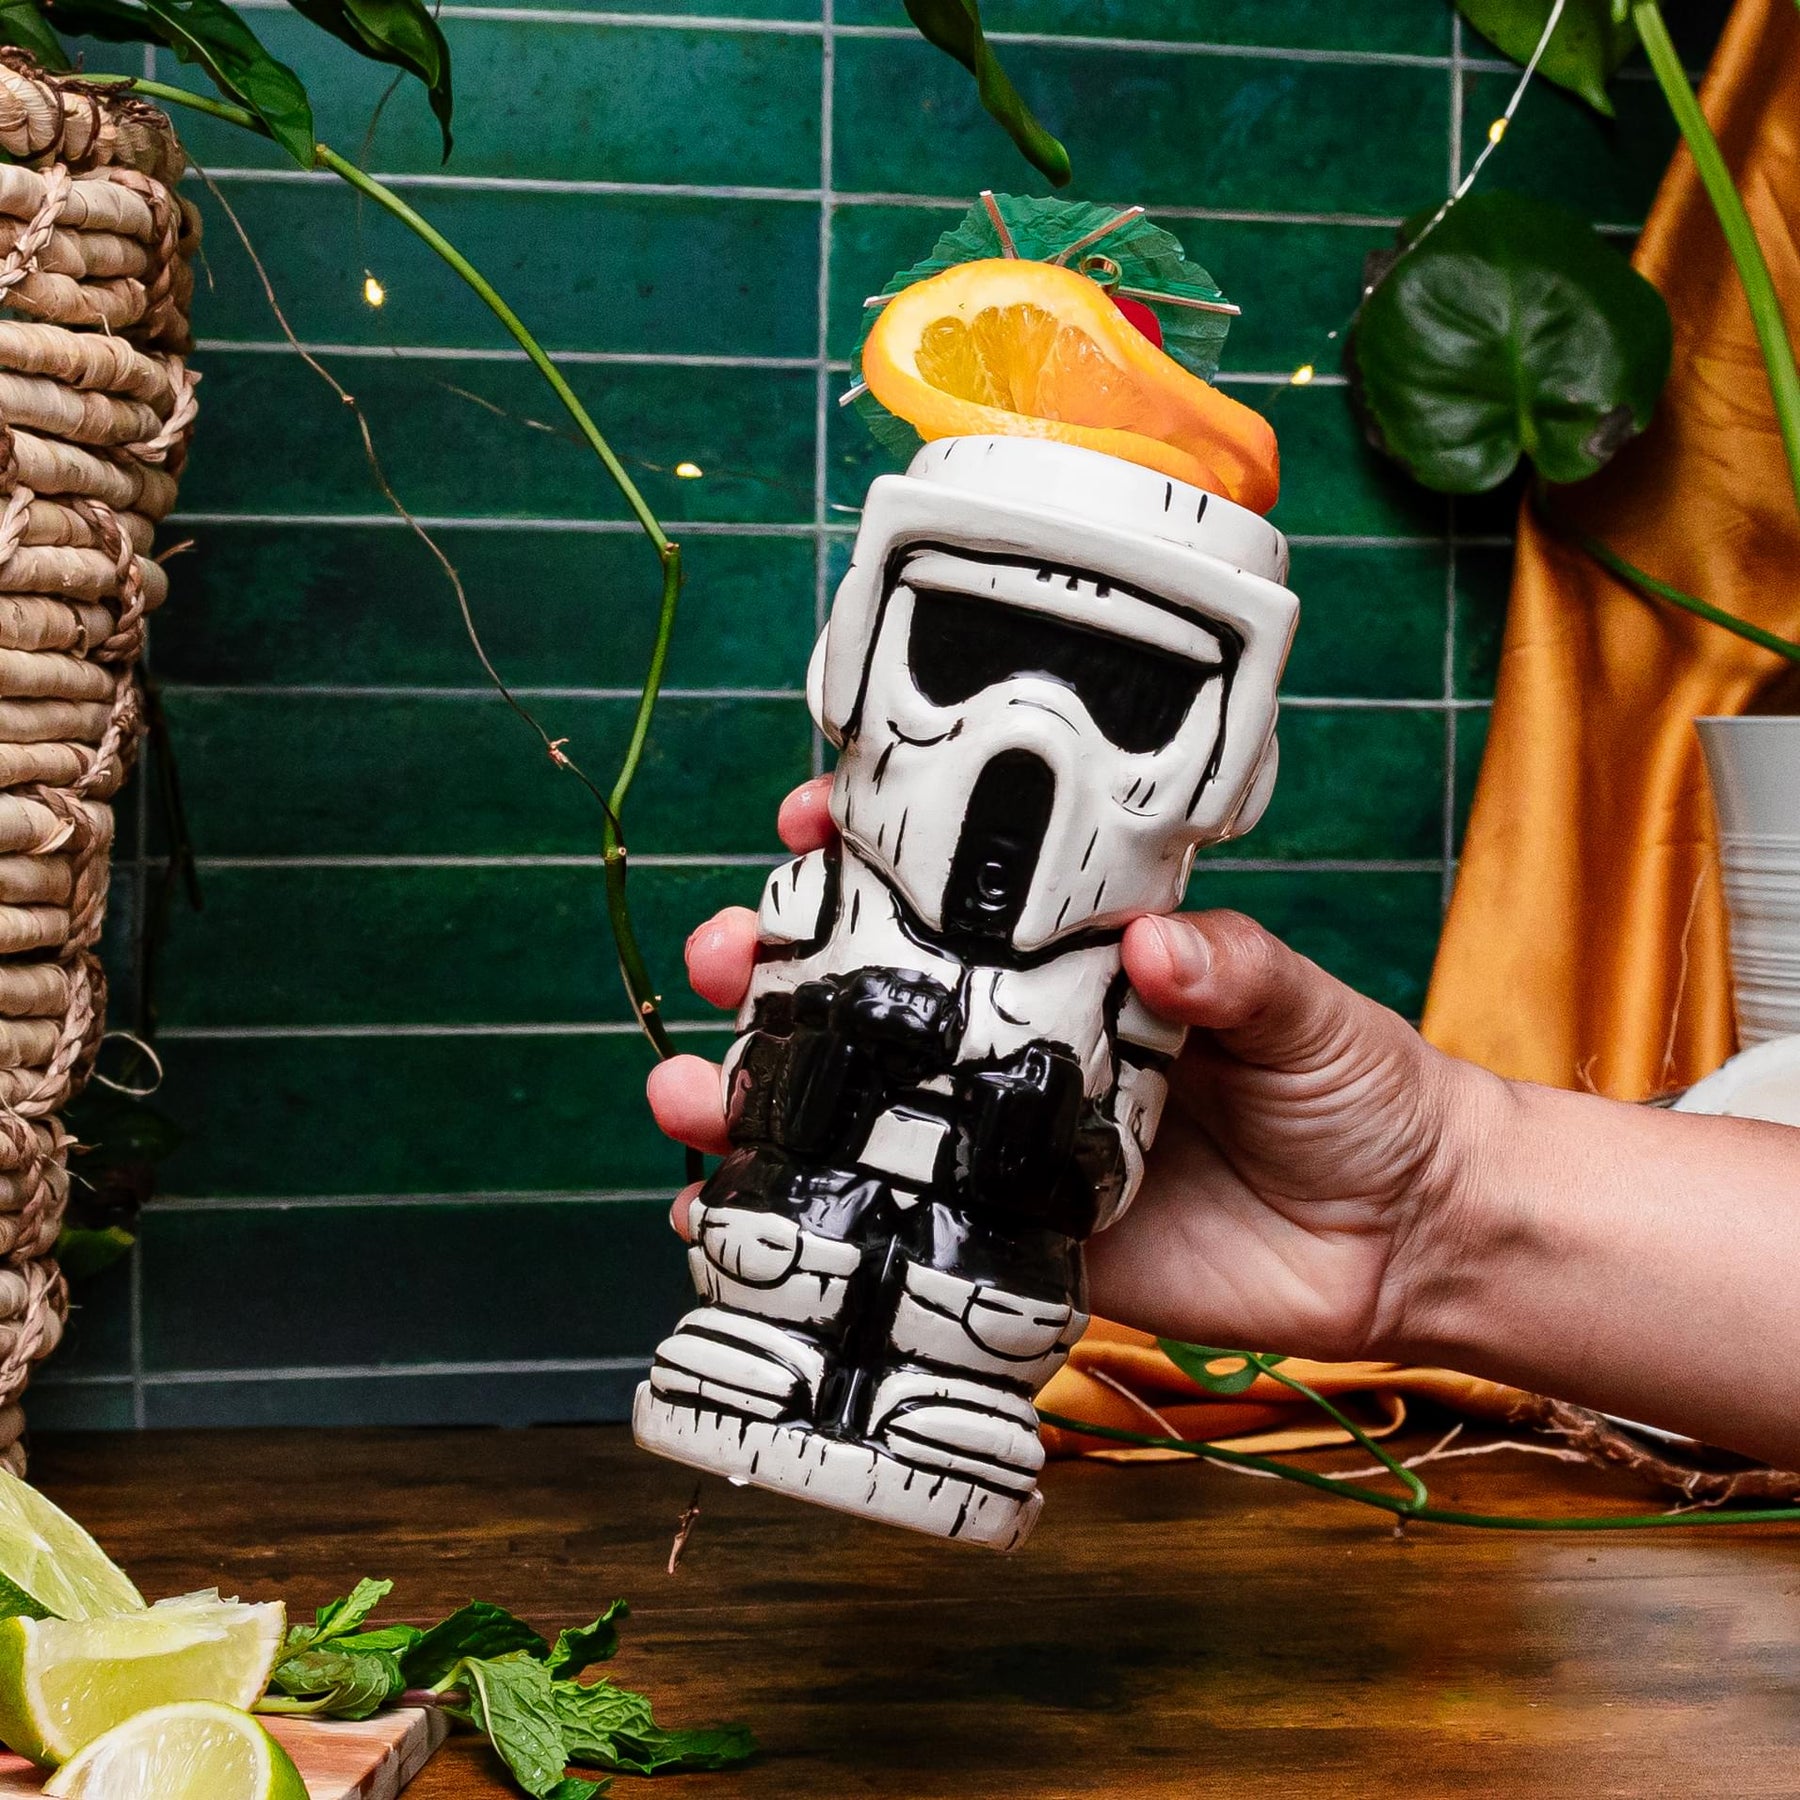 Geeki Tikis Star Wars Scout Trooper Ceramic Mug | Holds 16 Ounces